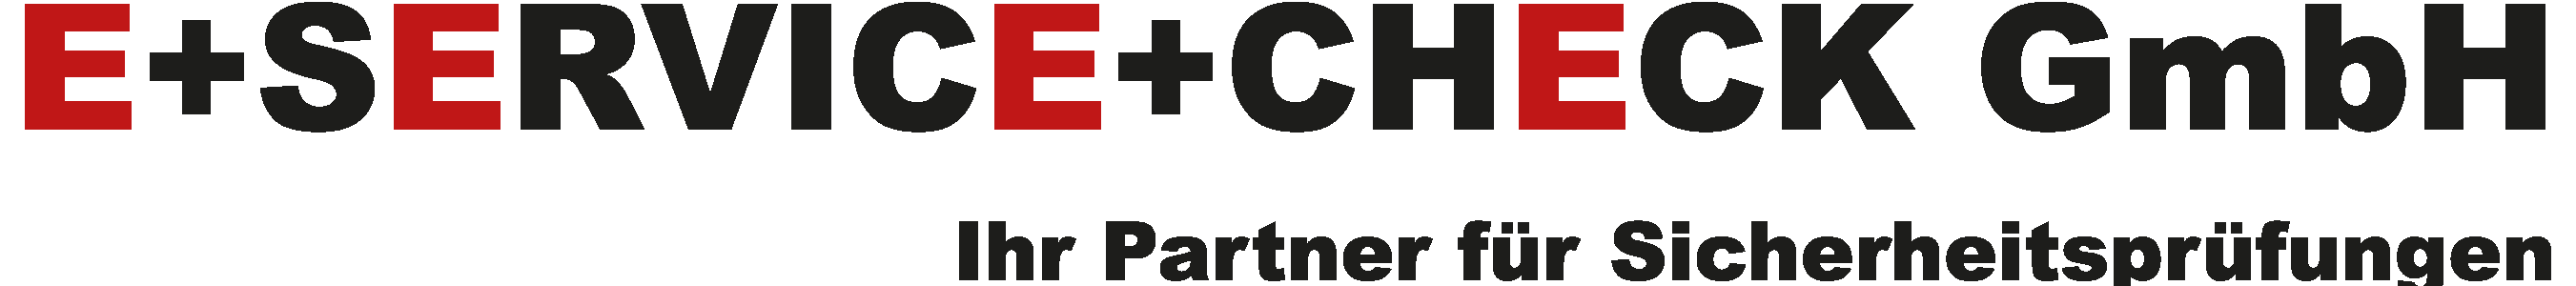 Logo von E+Service+Check GmbH